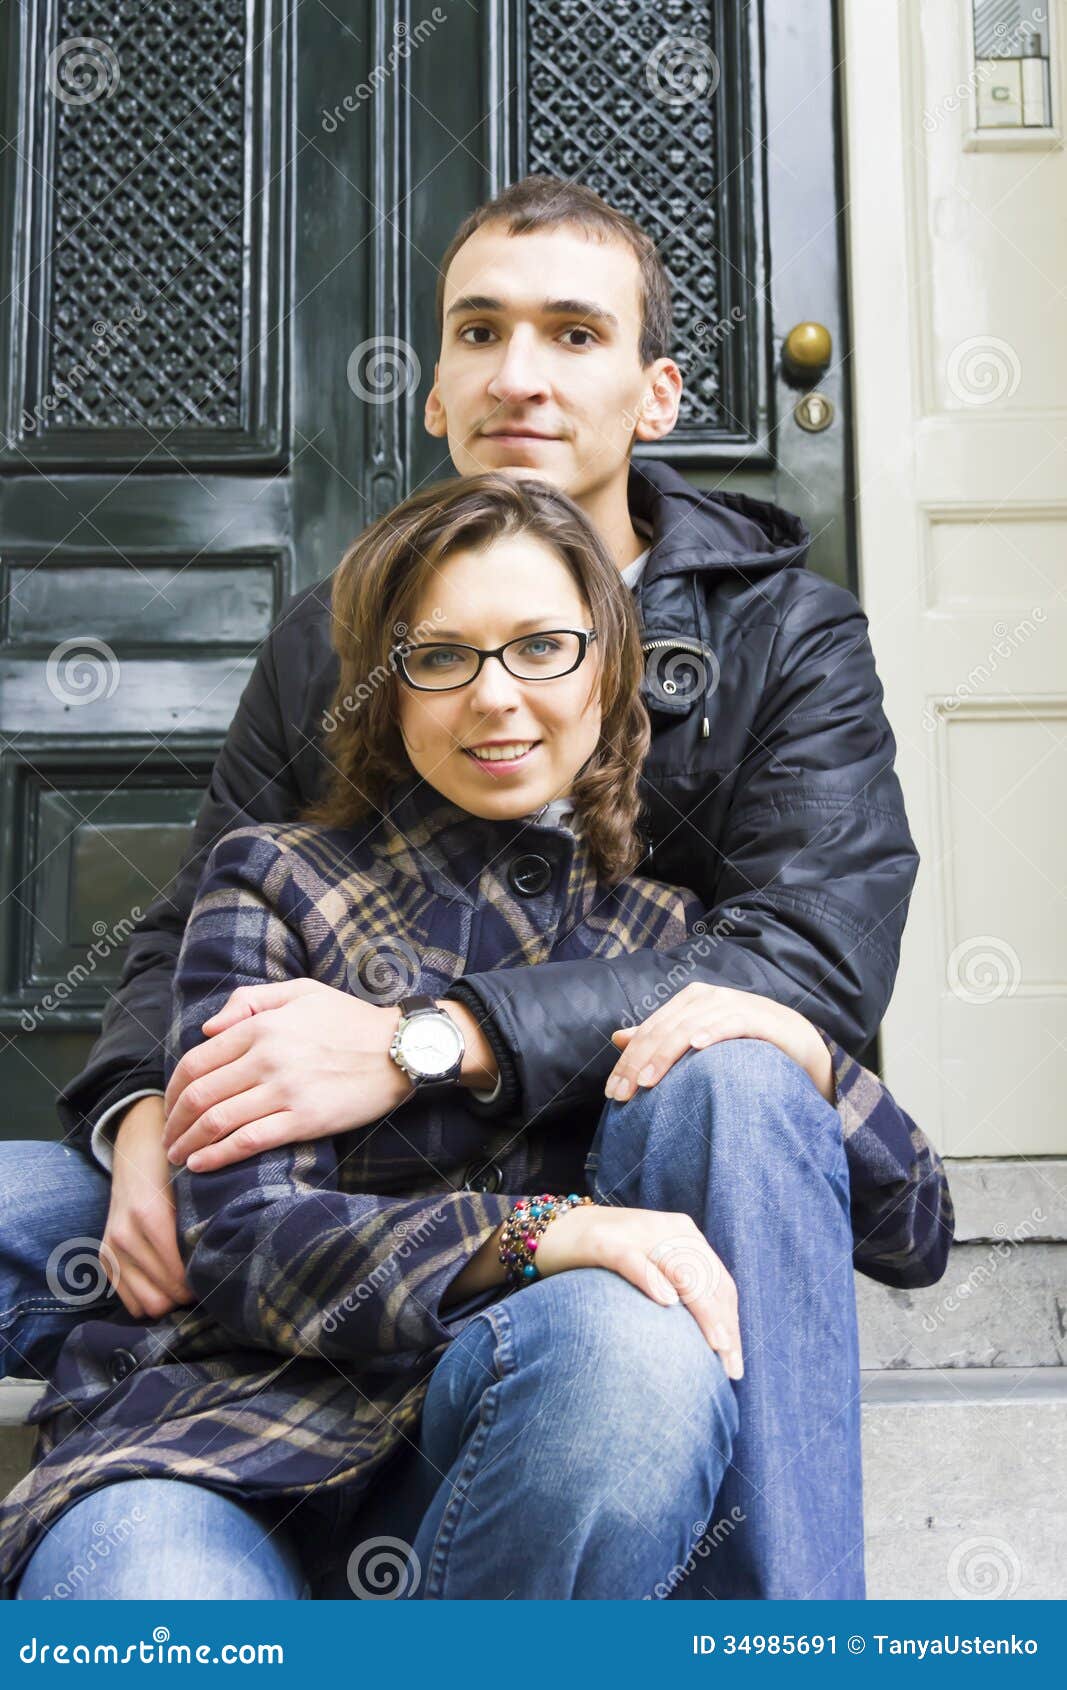 amateur teen couple dutch free pic hd